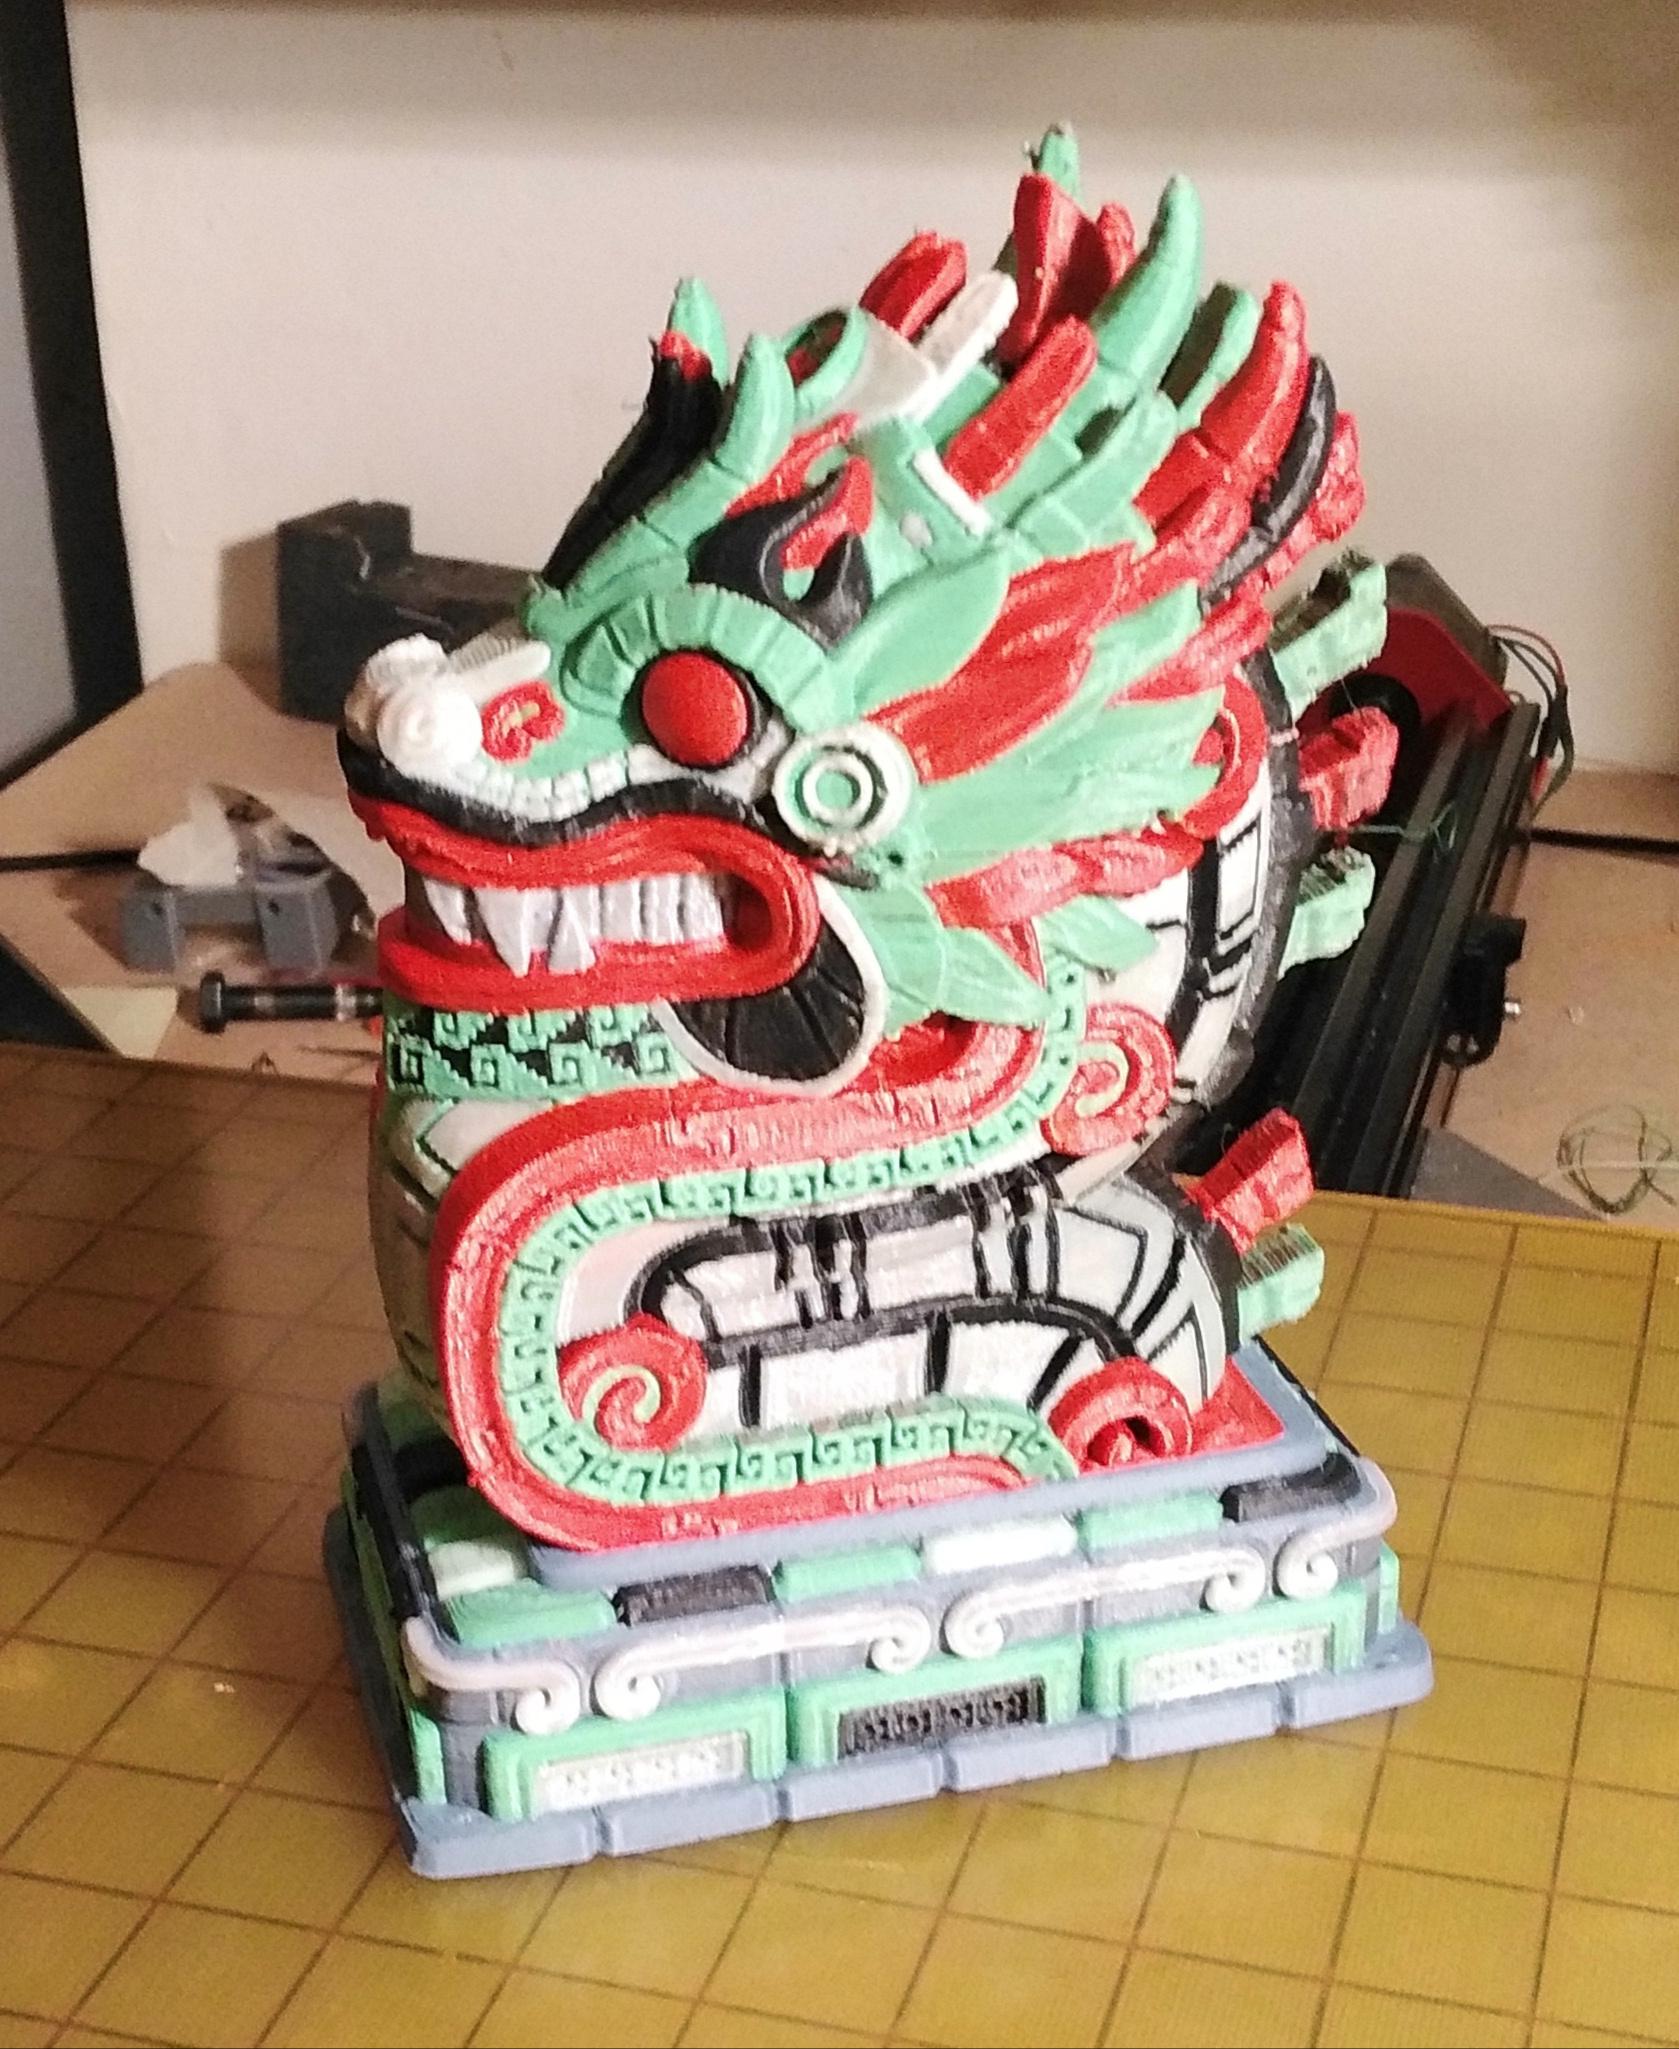 Aztec Dragon bust (Pre 3d model